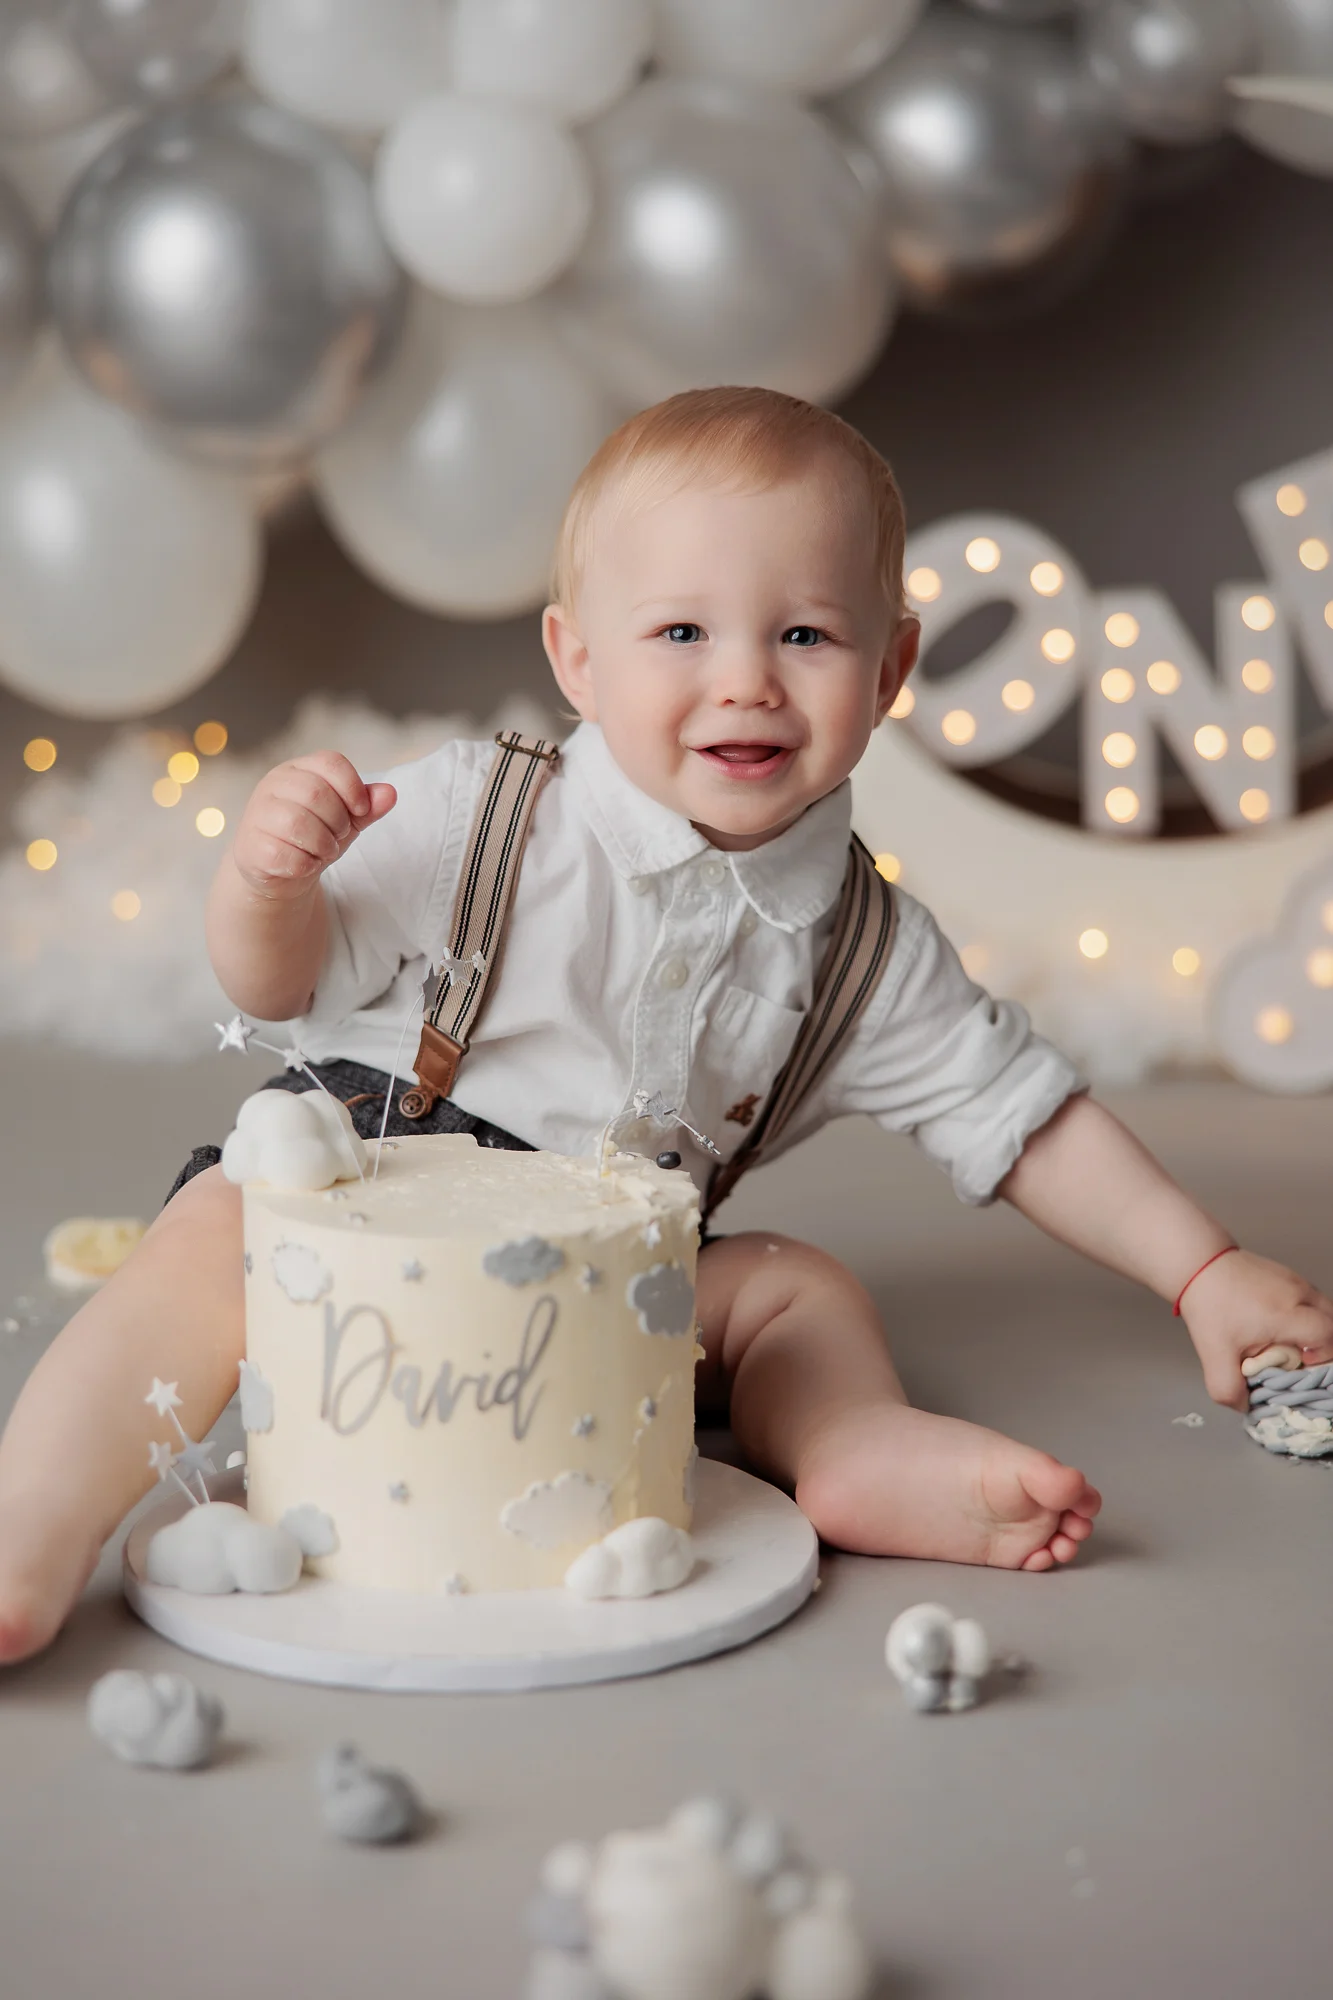 Baby Boy having cake for a cake smash photography